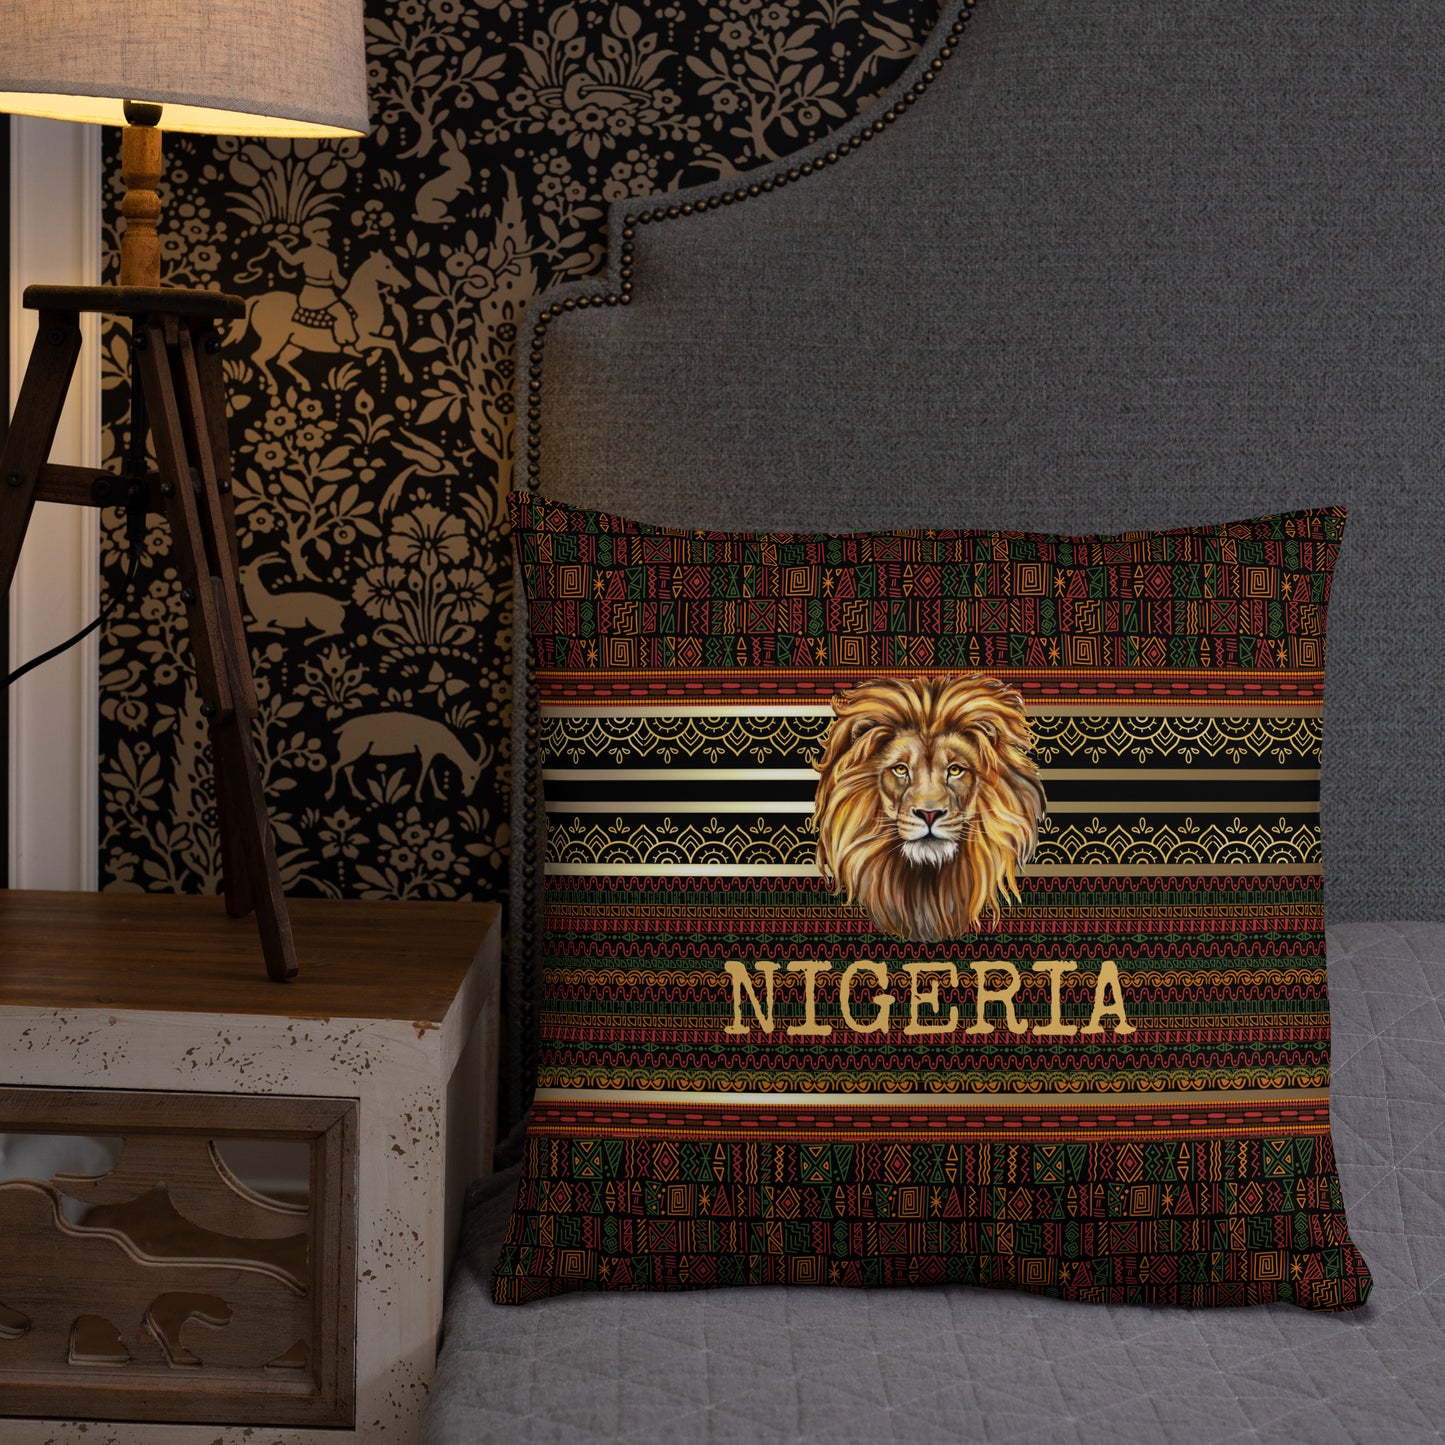 Nigeria Travel Gift #2 | Nigeria Vacation Gift | Nigeria Travel Souvenir | Nigeria Vacation Memento | Nigeria Home Décor | Keepsake Souvenir Gift | Travel Vacation Gift | World Travel Gift Pillow